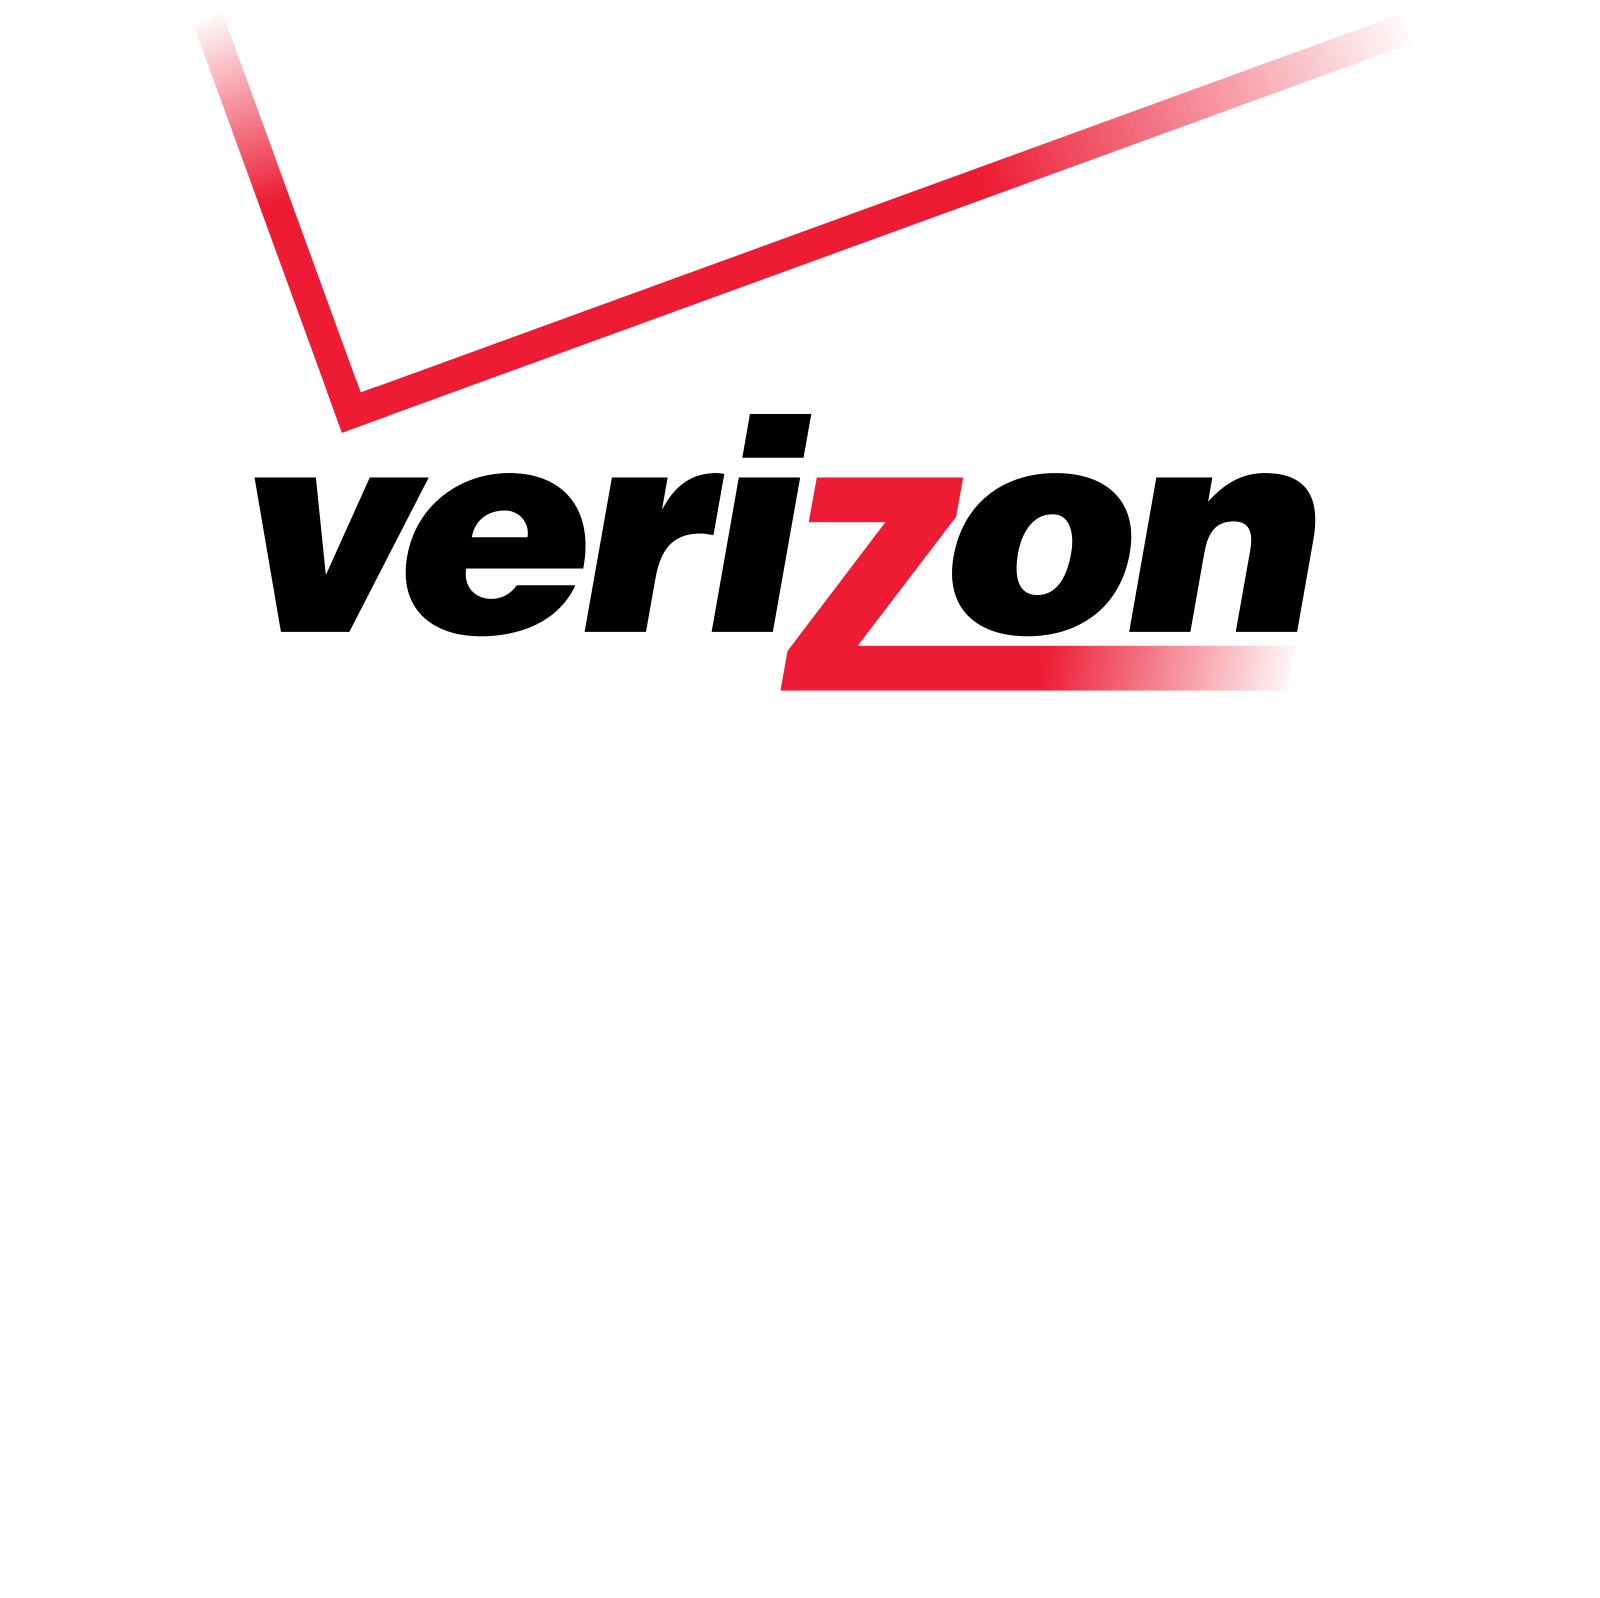 Verizon Small Logo - Verizon - U.S. wireless carrier